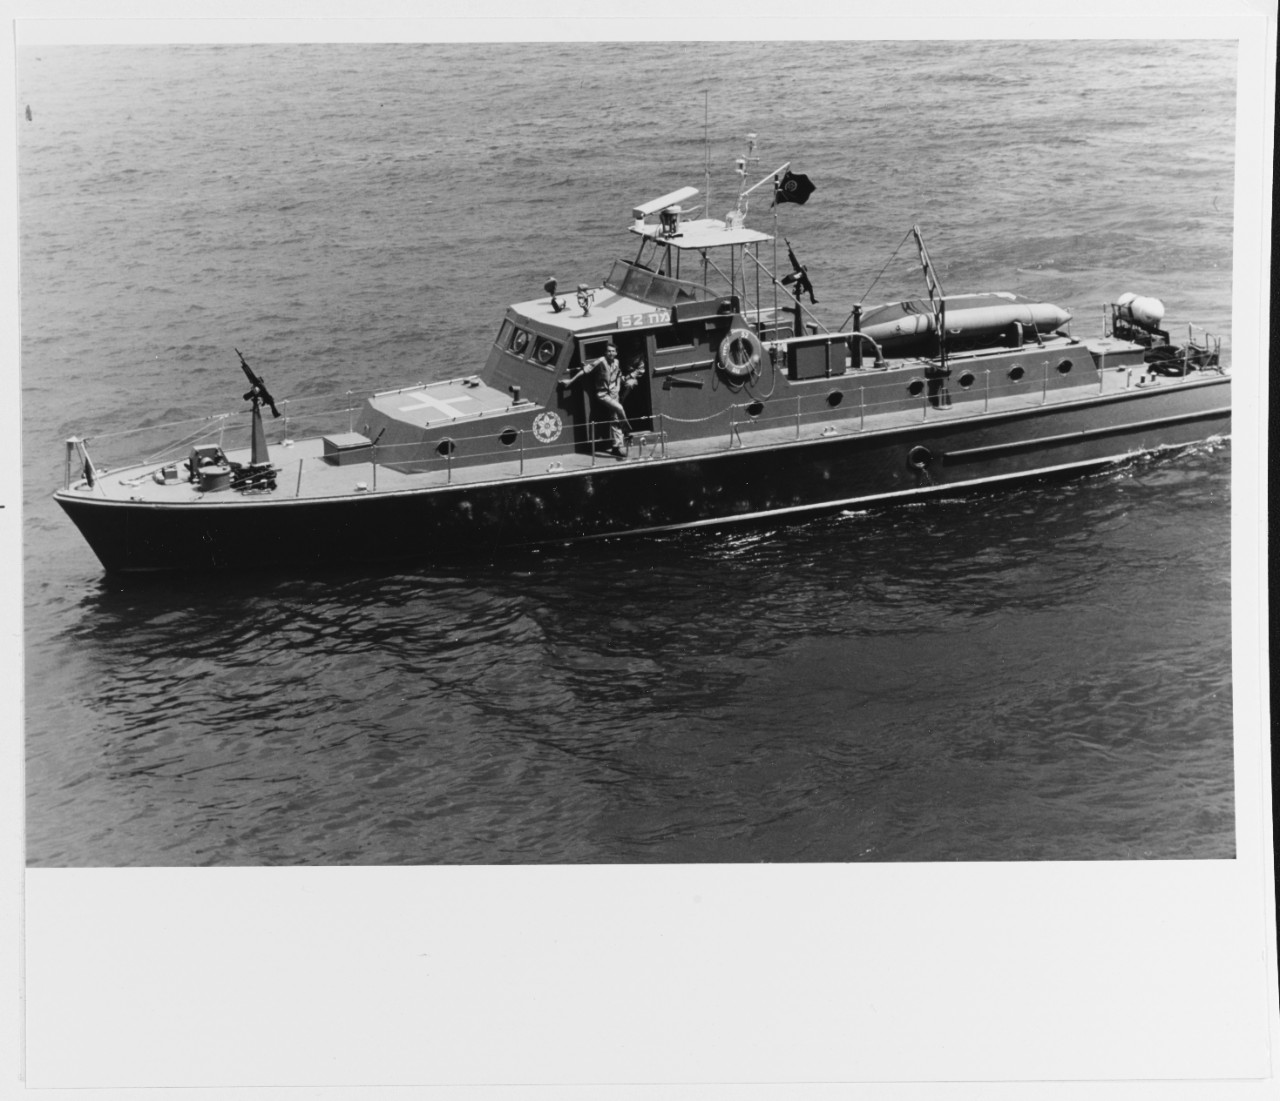 NEGBA (#52), Israeli Patrol Boat, 1968